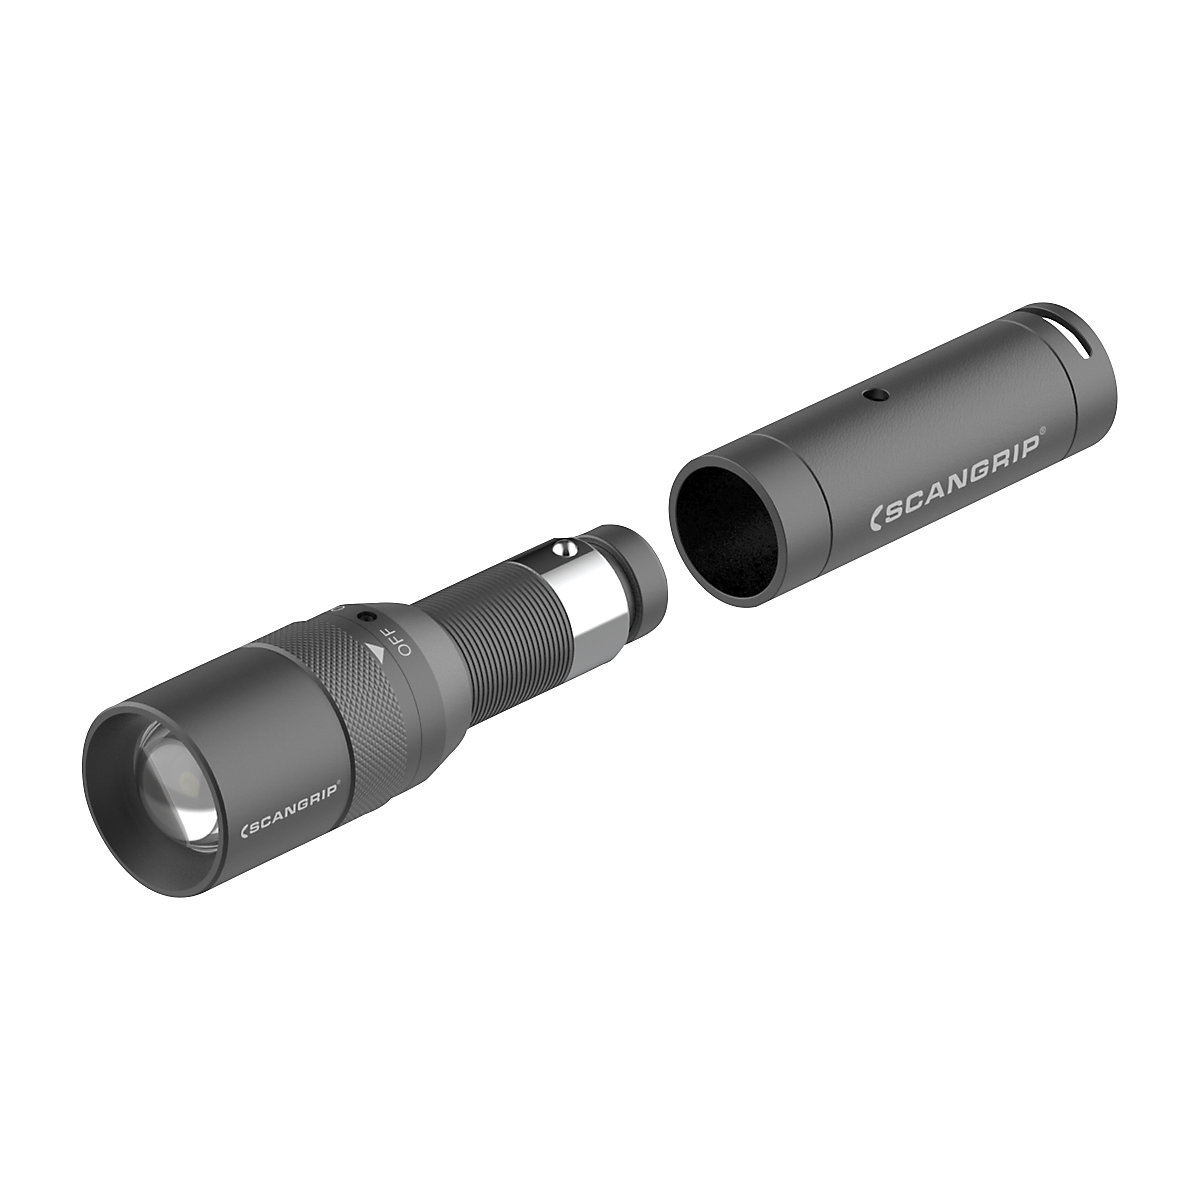 FLASH 12 - 24 V rechargeable LED flashlight - SCANGRIP